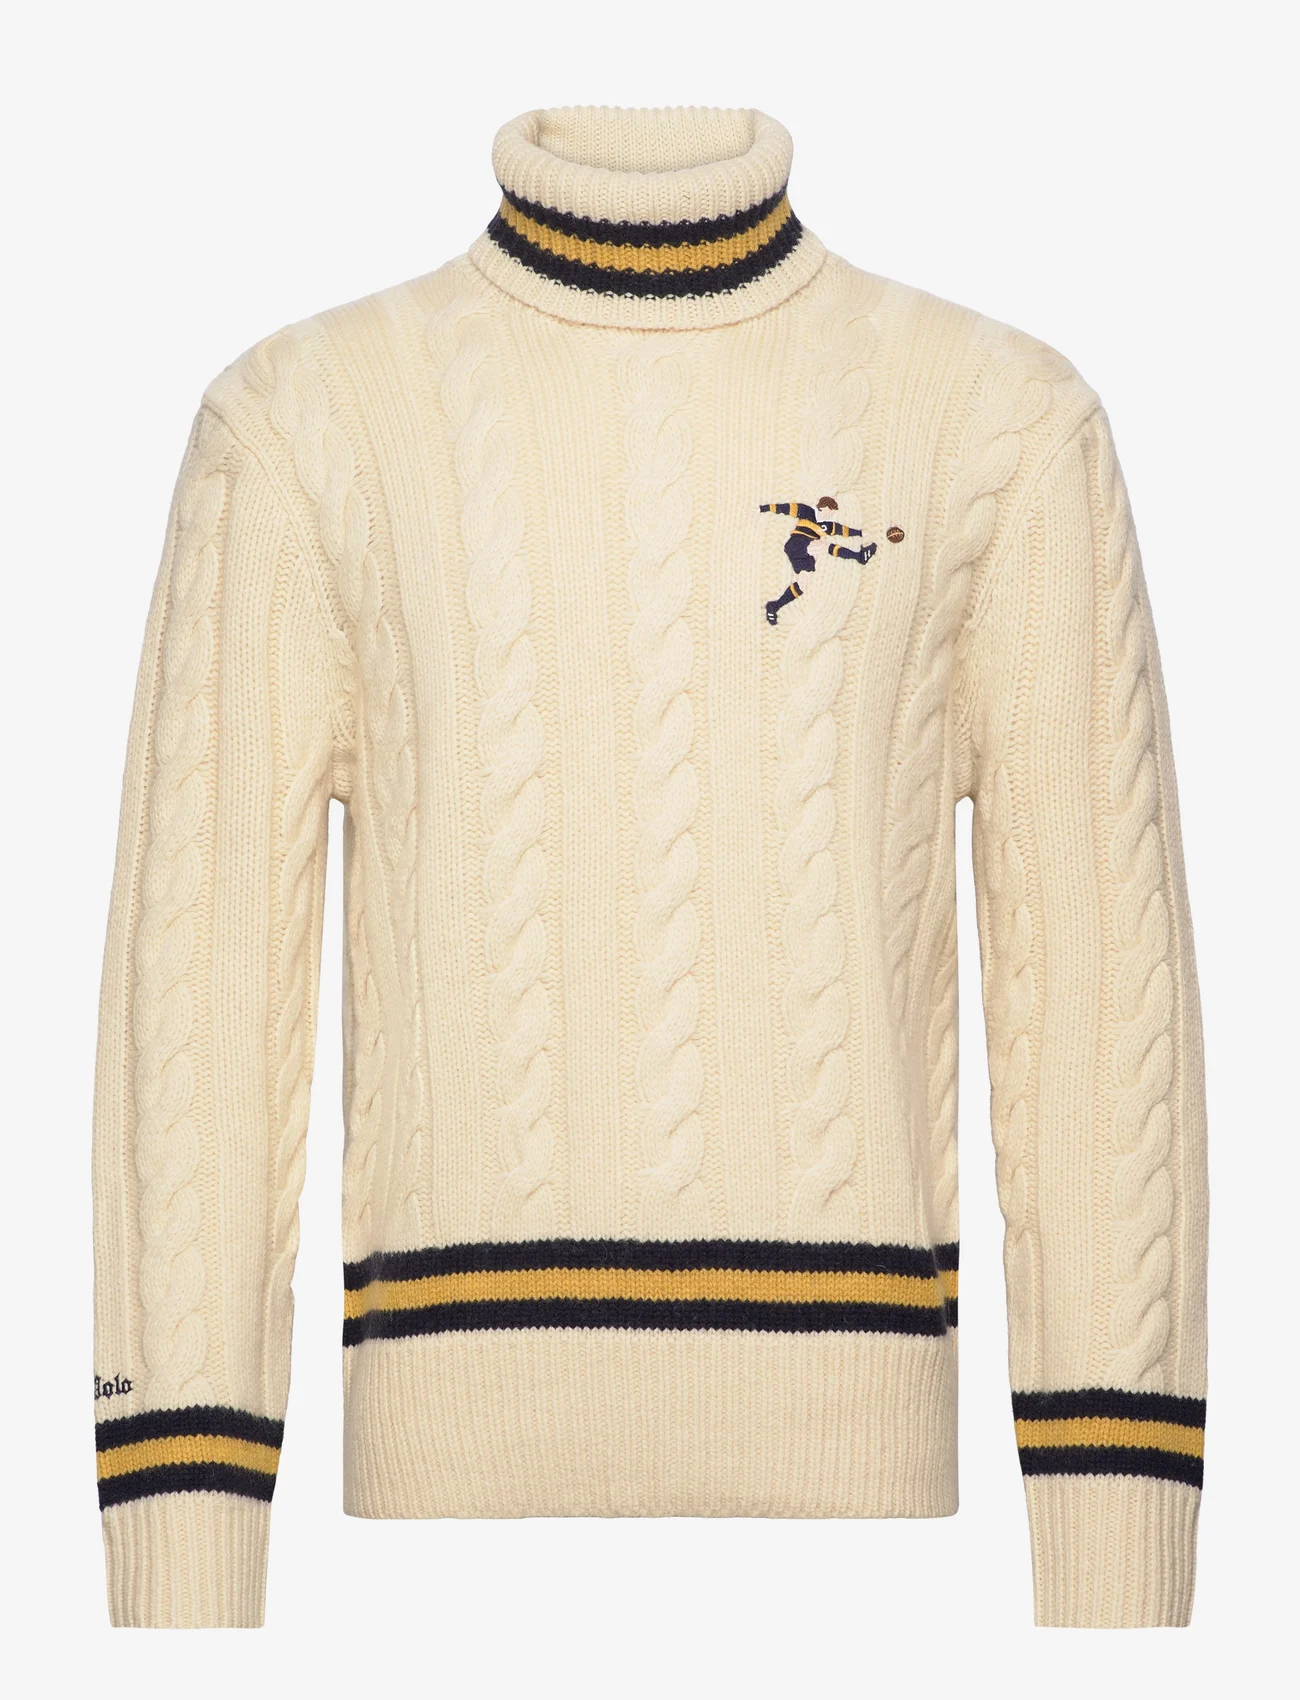 Polo Ralph Lauren - Cable-Knit Wool-Blend Turtleneck Sweater - megztiniai su aukšta apykakle - cream combo - 0